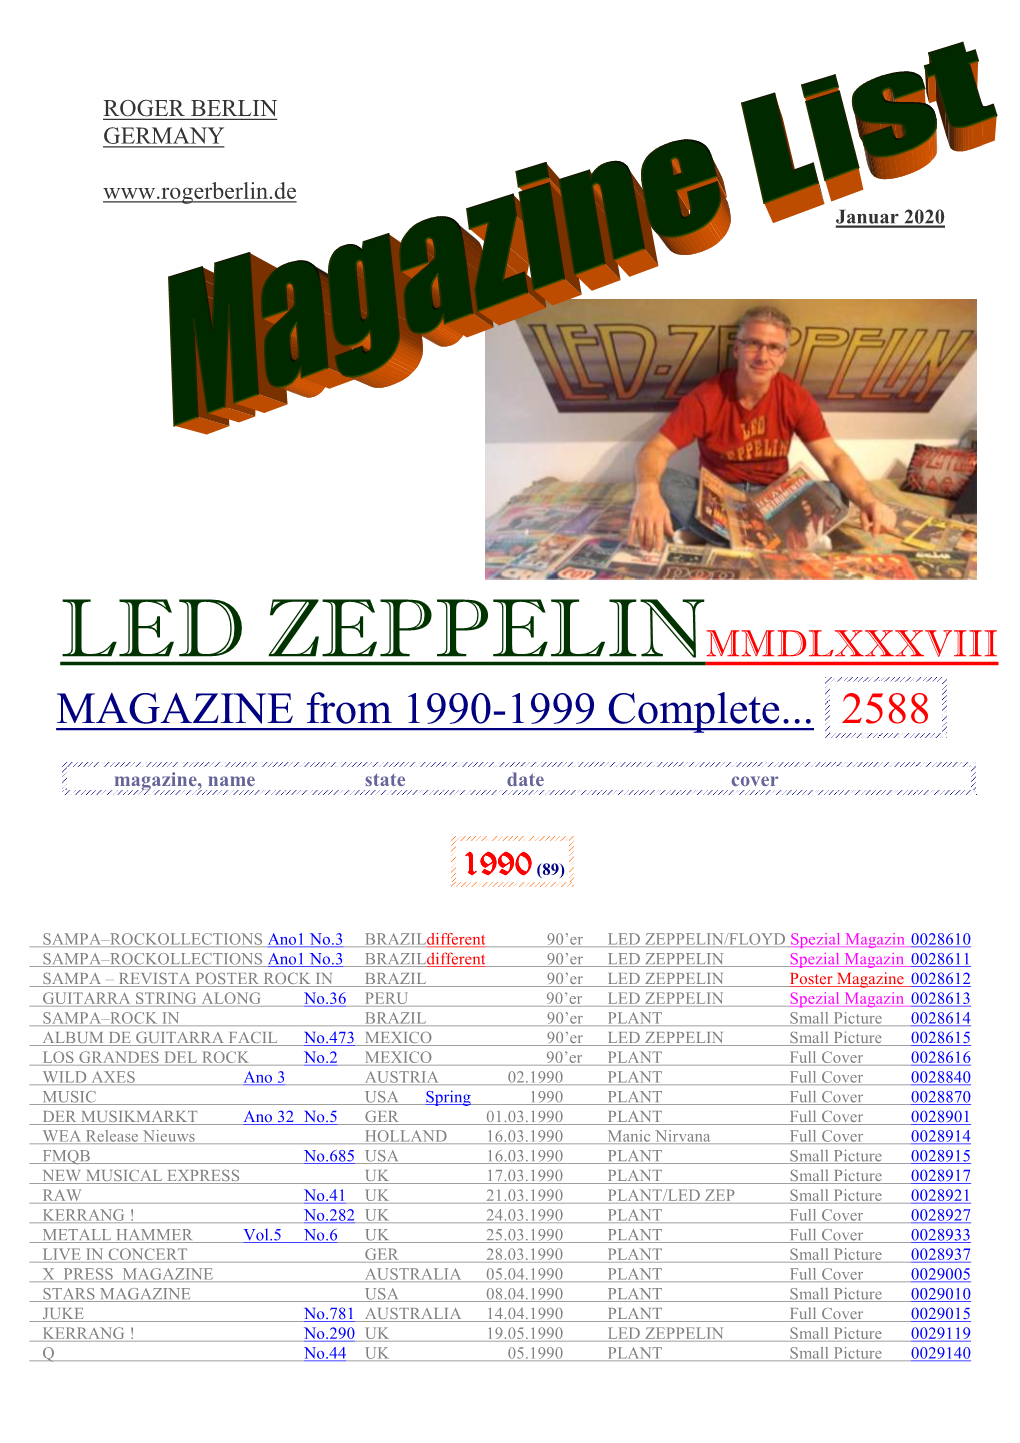 LED ZEPPELINMMDLXXXVIII MAGAZINE from 1990-1999 Complete